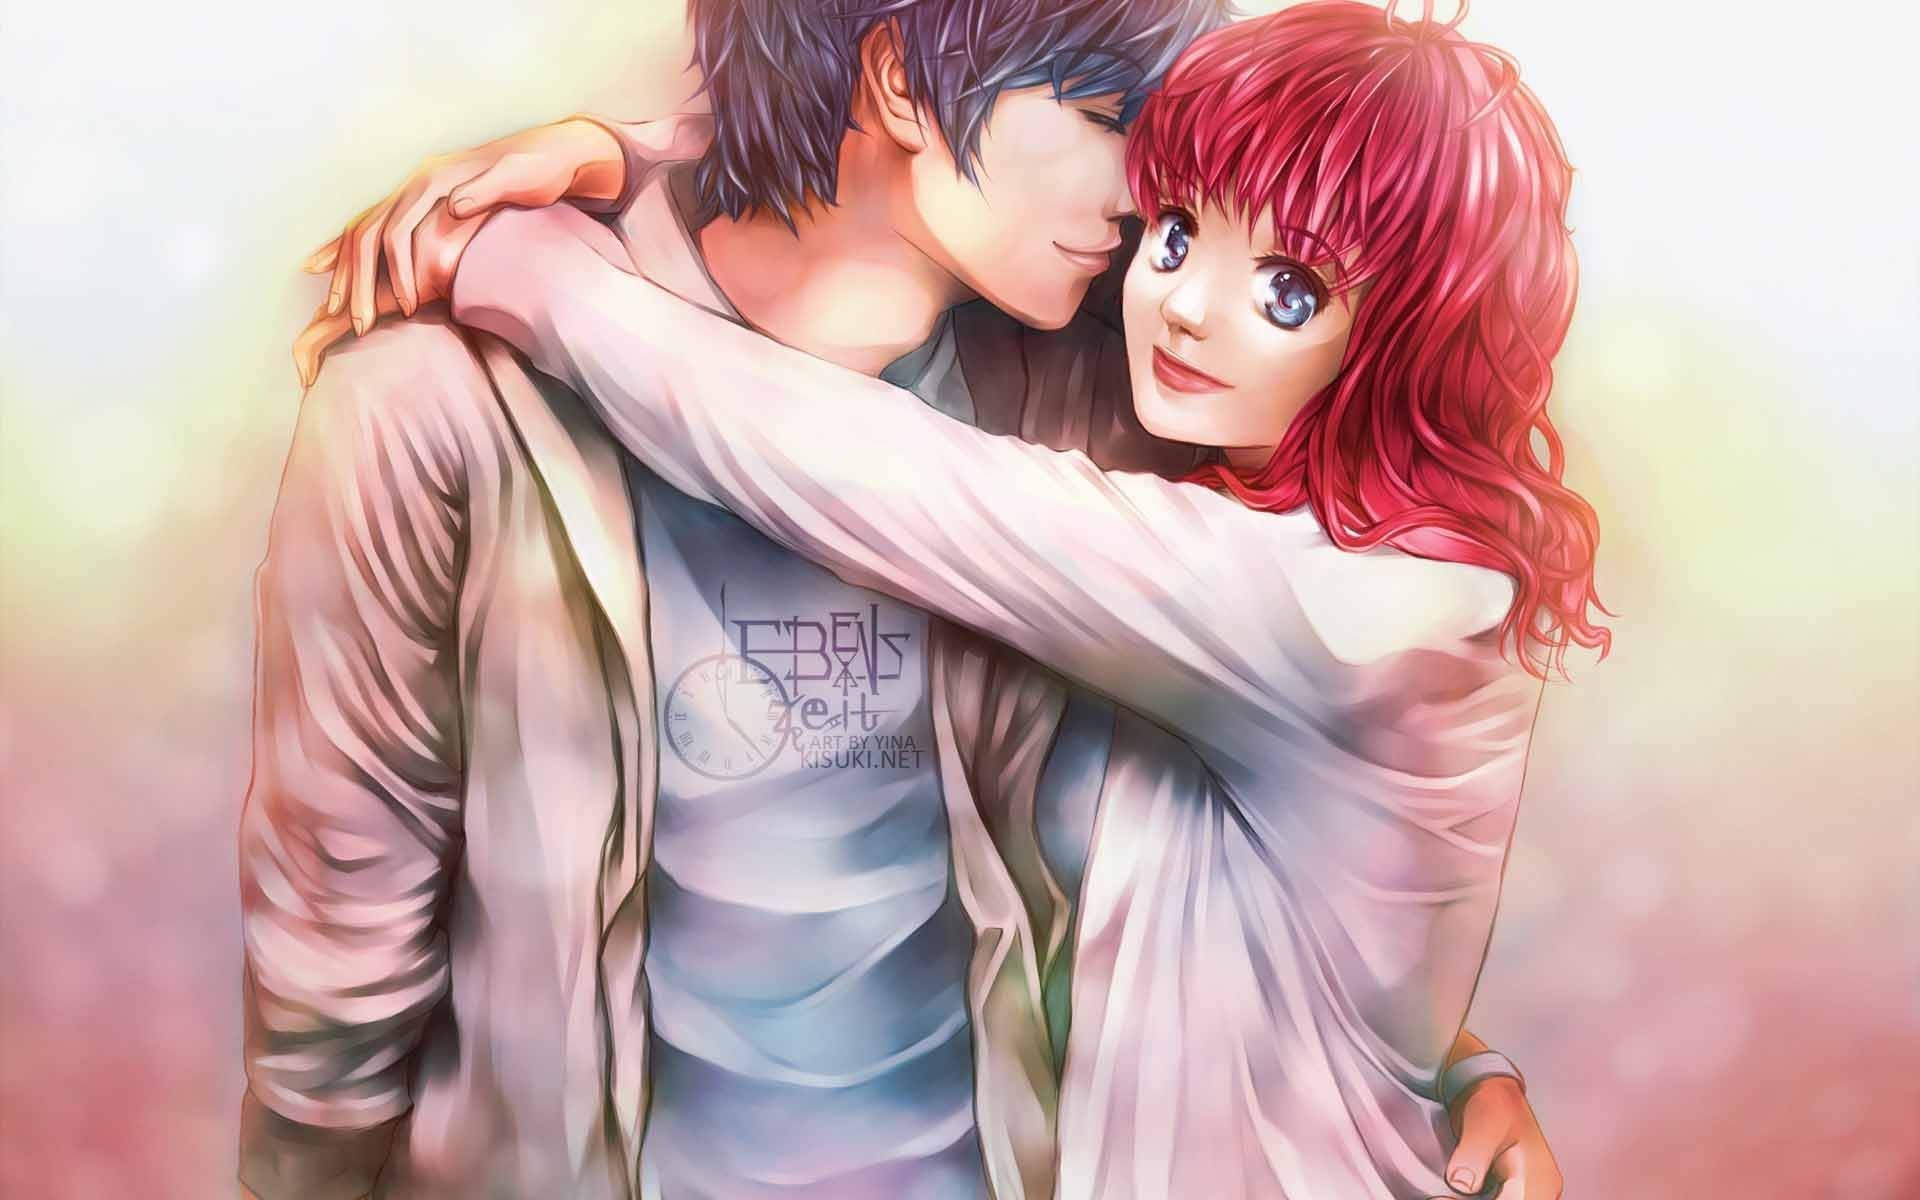 Anime Hug Boy And Girl With Jacket